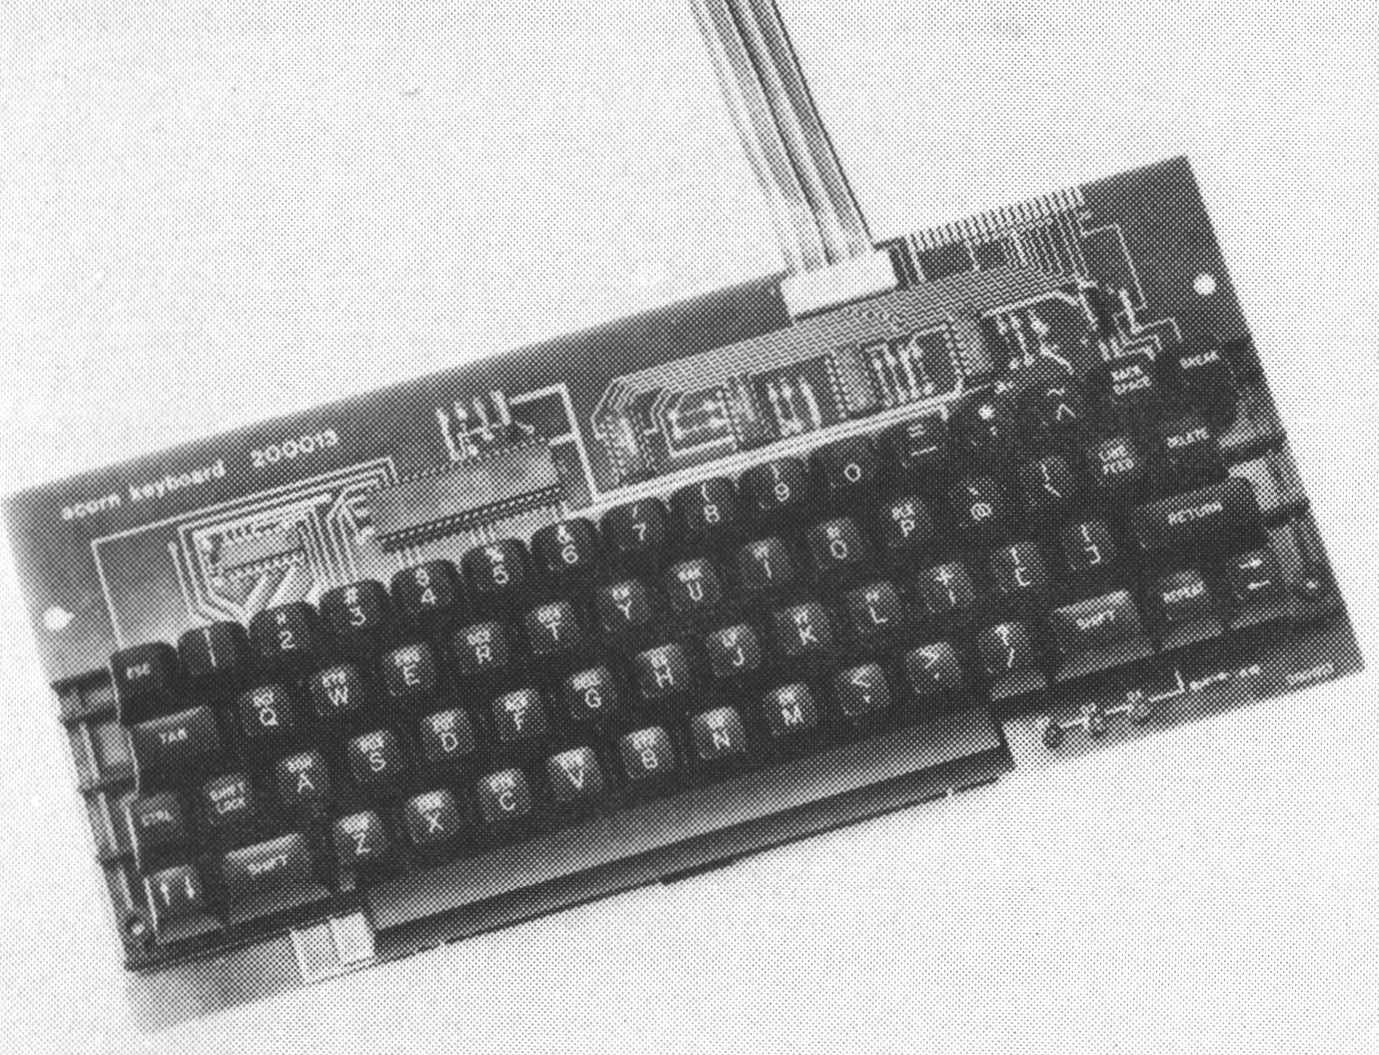 Acorn System Keyboard Bare PCB